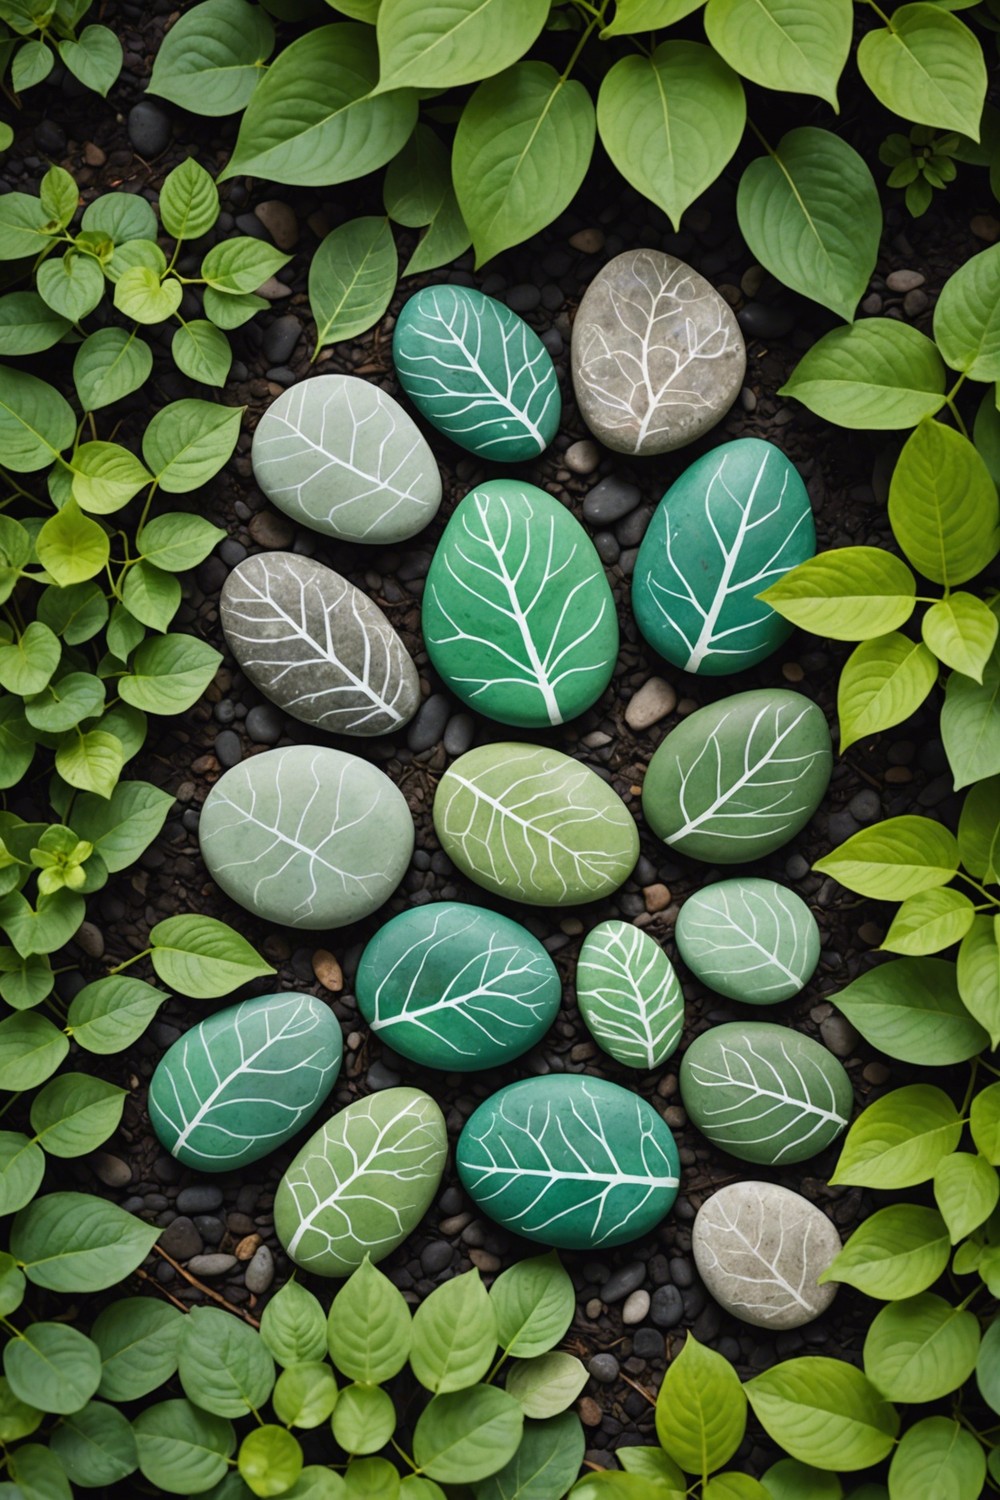 Hand-Printed Leaf Designs on Rocks